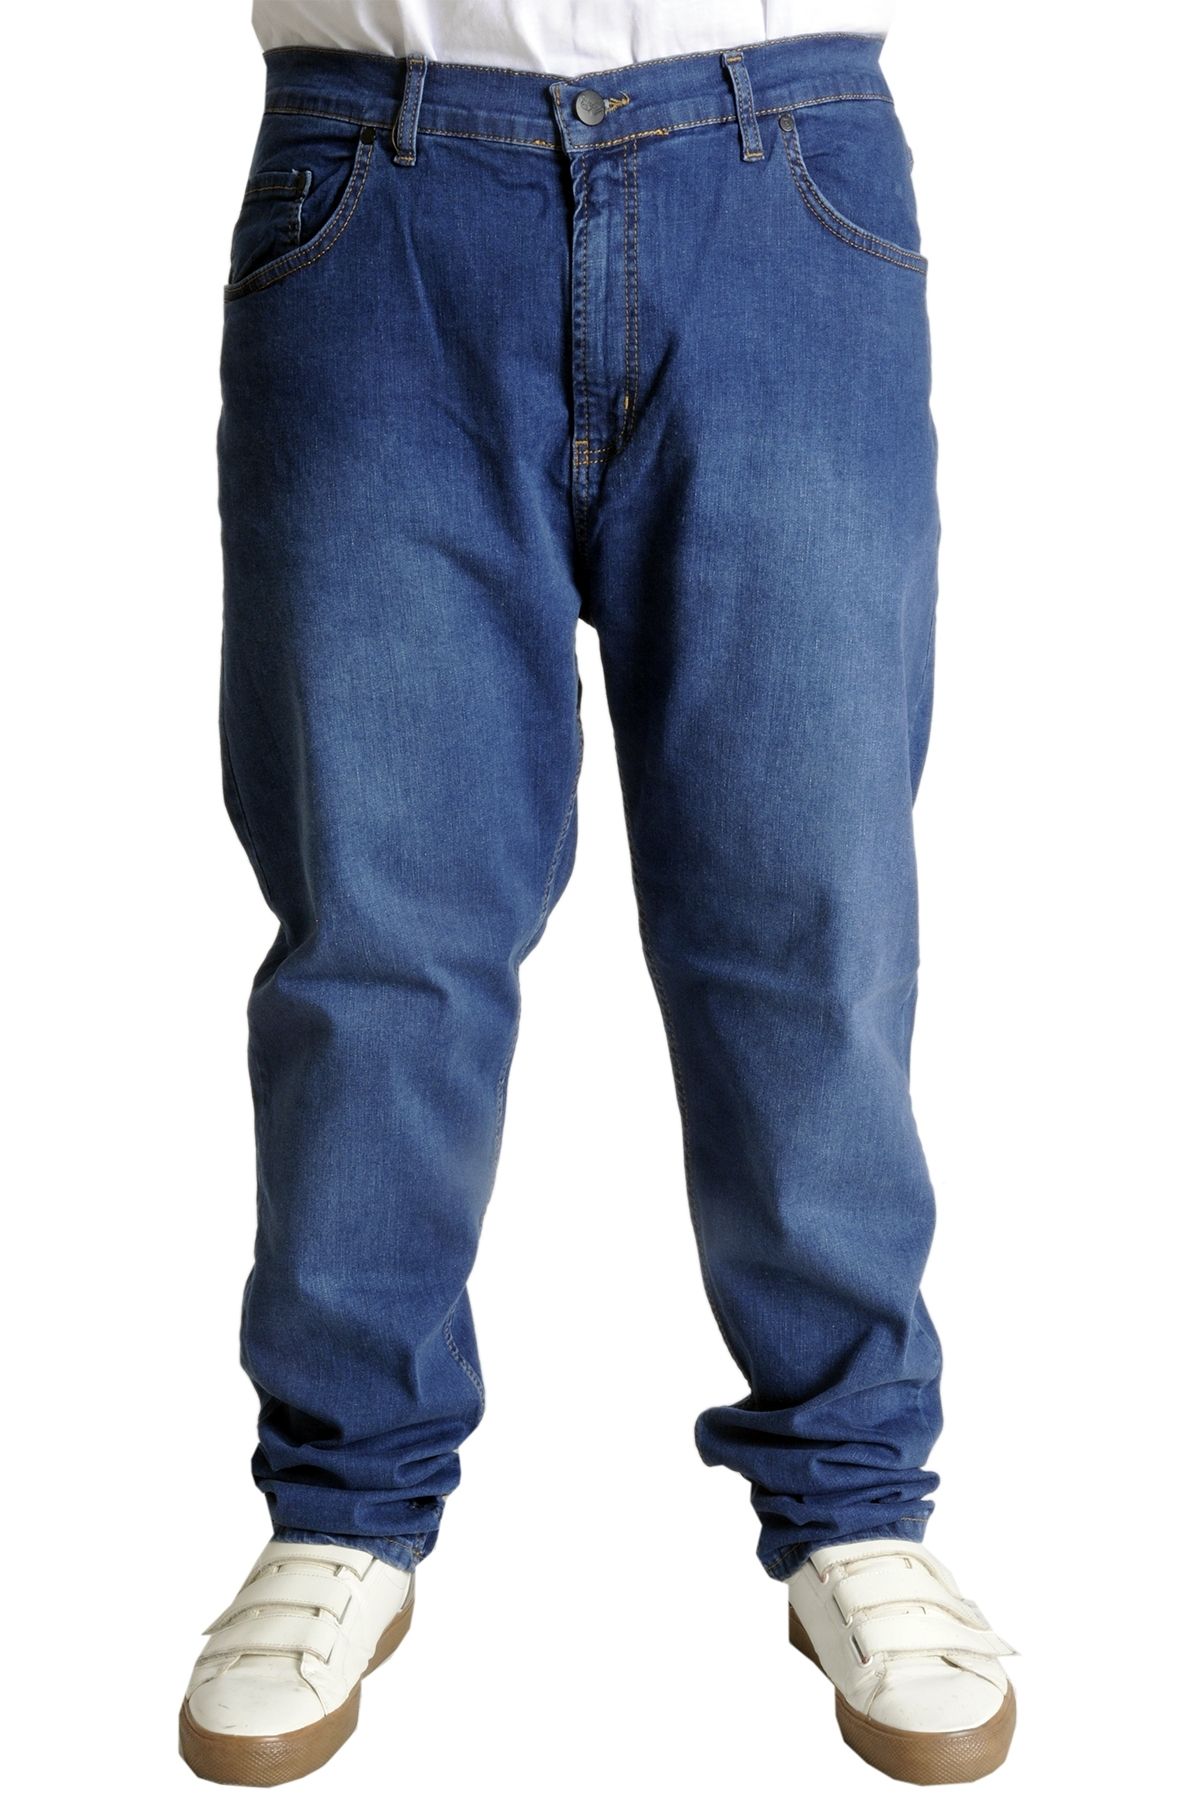 Modexl Mode Xl Erkek Kot Pantolon Klasik 5cep Deep Royal Blue 22932 Koyu Mavi